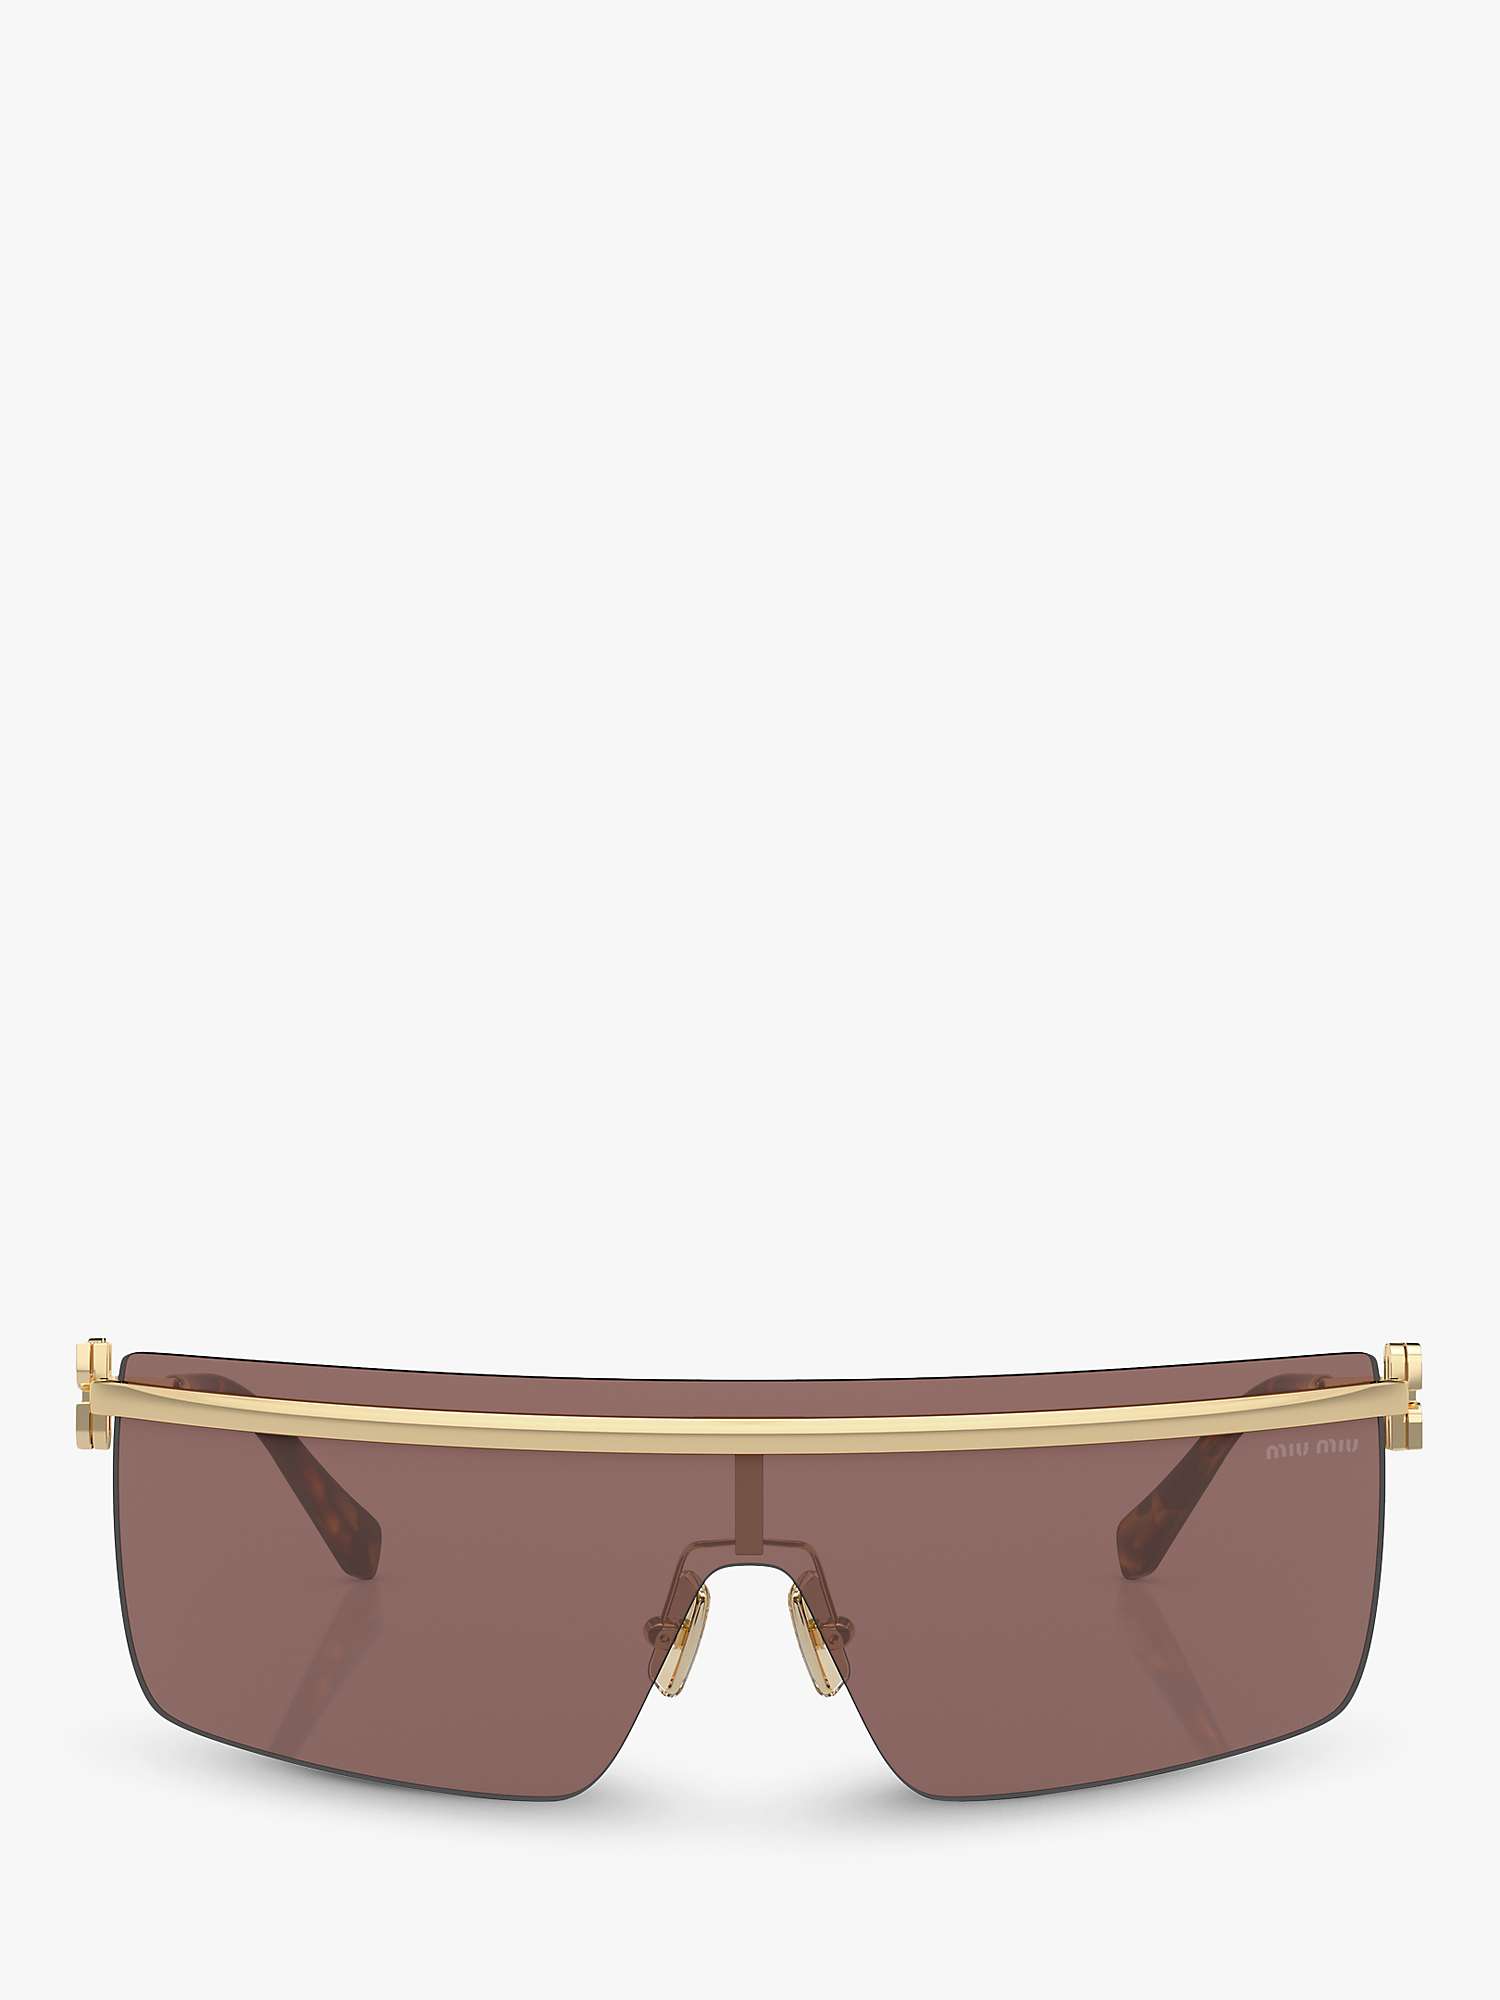 Buy Miu Miu MU50ZS Women's Irregular Sunglasses Online at johnlewis.com